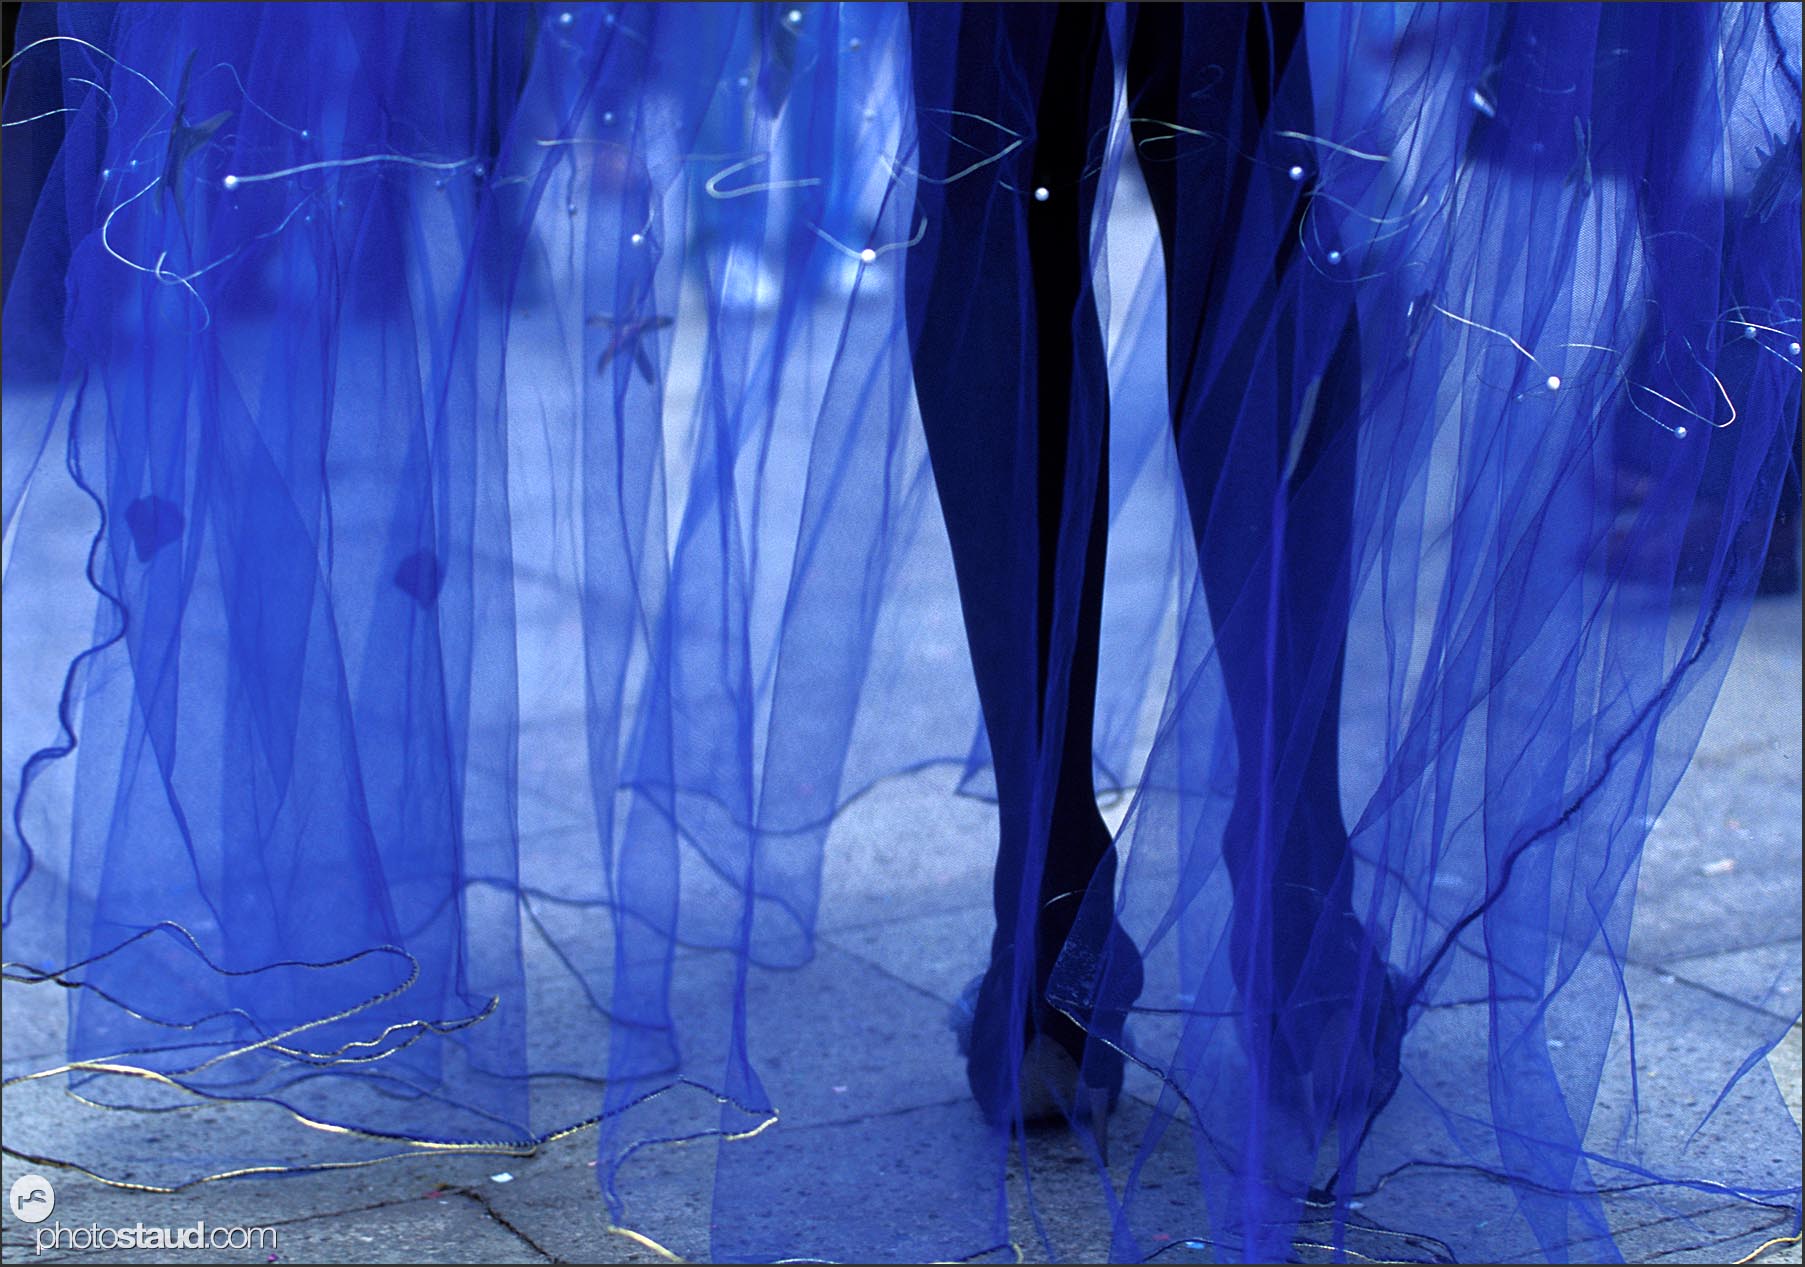 Legs and blue veil, Venice carnival, Italy